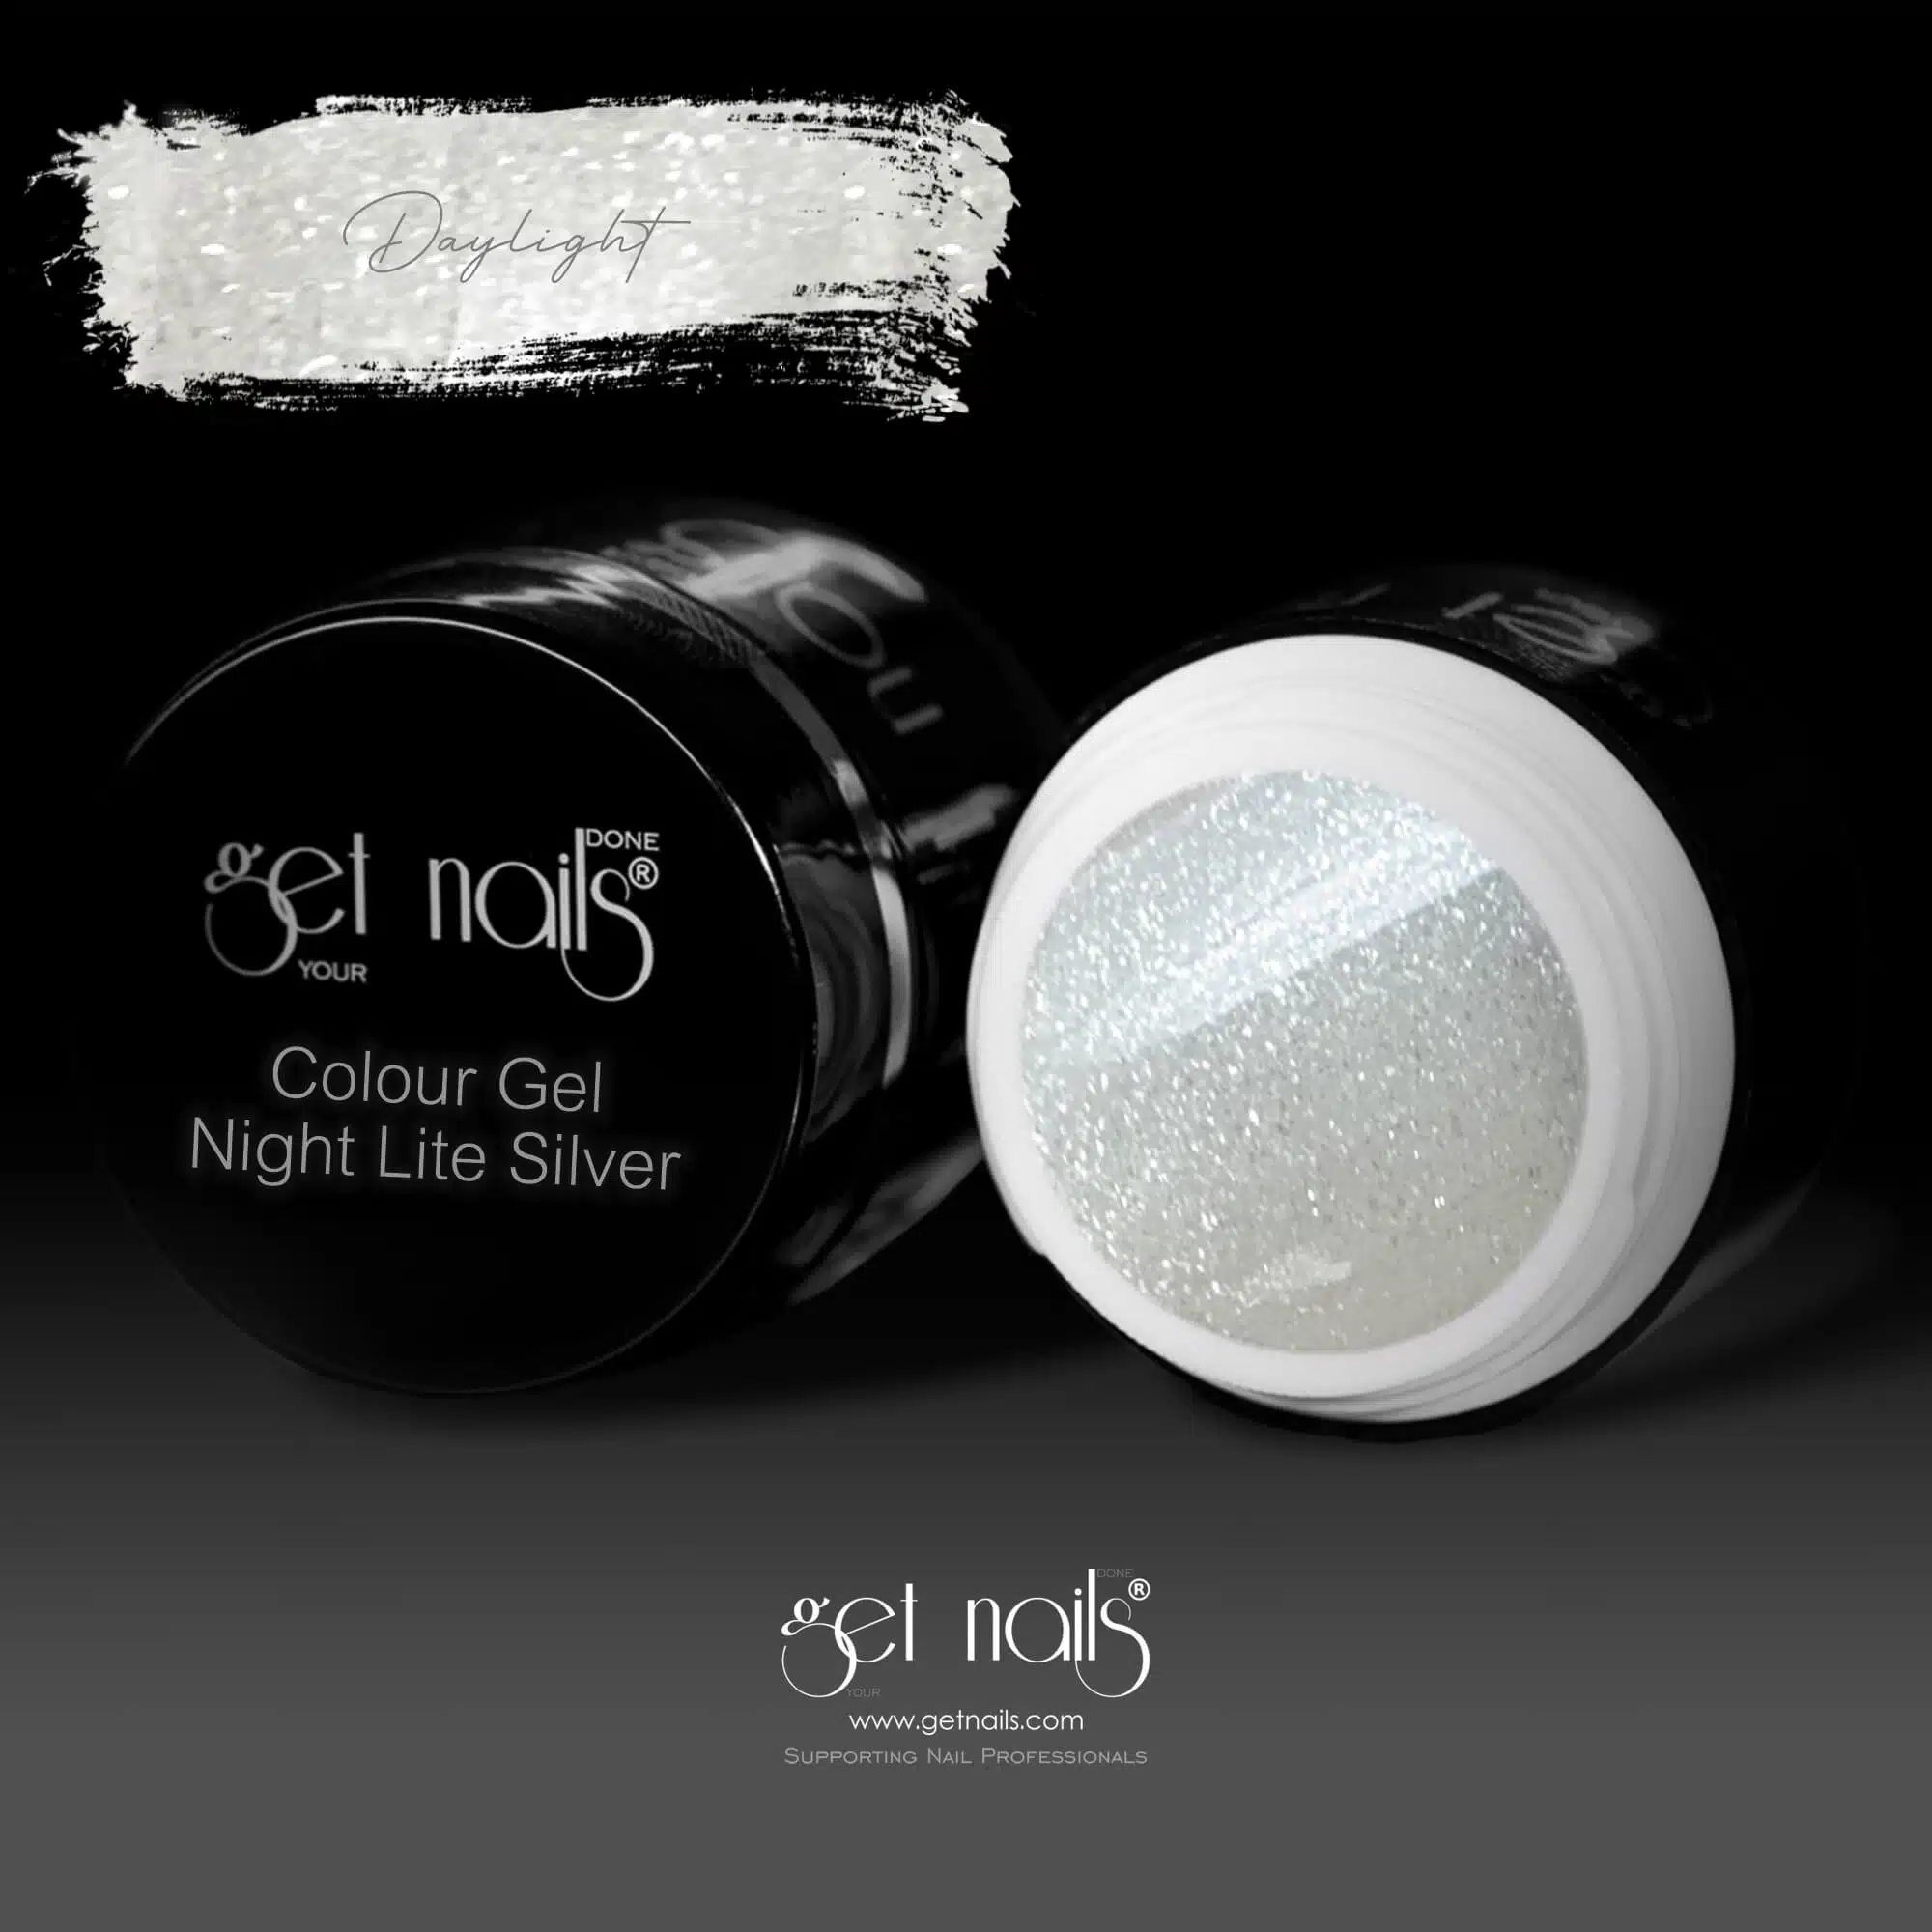 Get Nails Austria - Night Lite Color Gel Silver 5г дневной